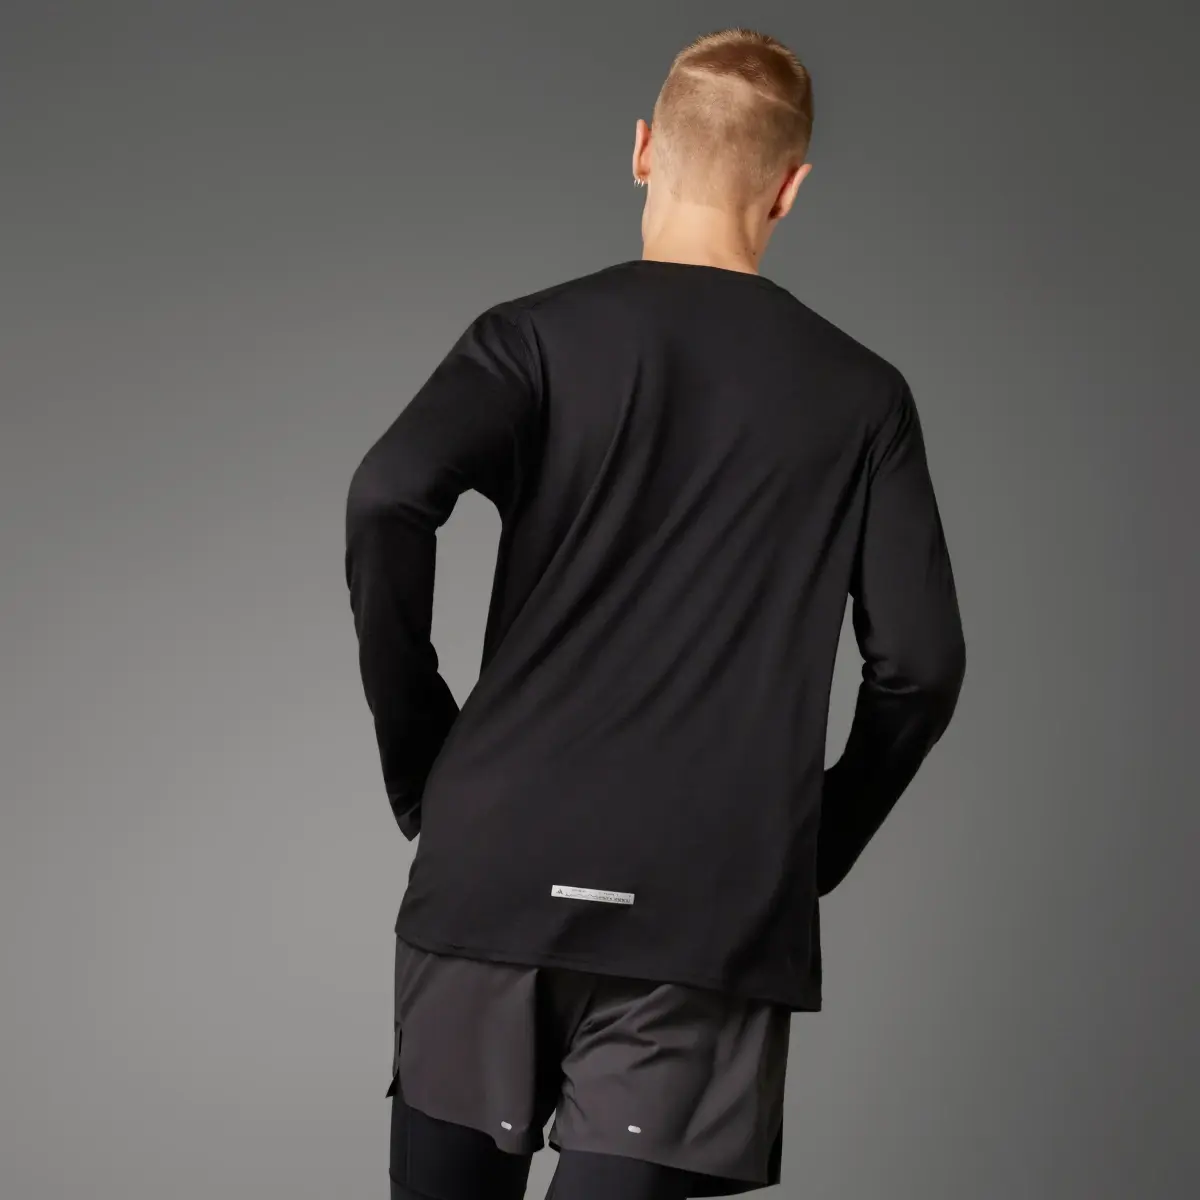 Adidas Koszulka Ultimate Running Conquer the Elements Merino Long Sleeve. 2